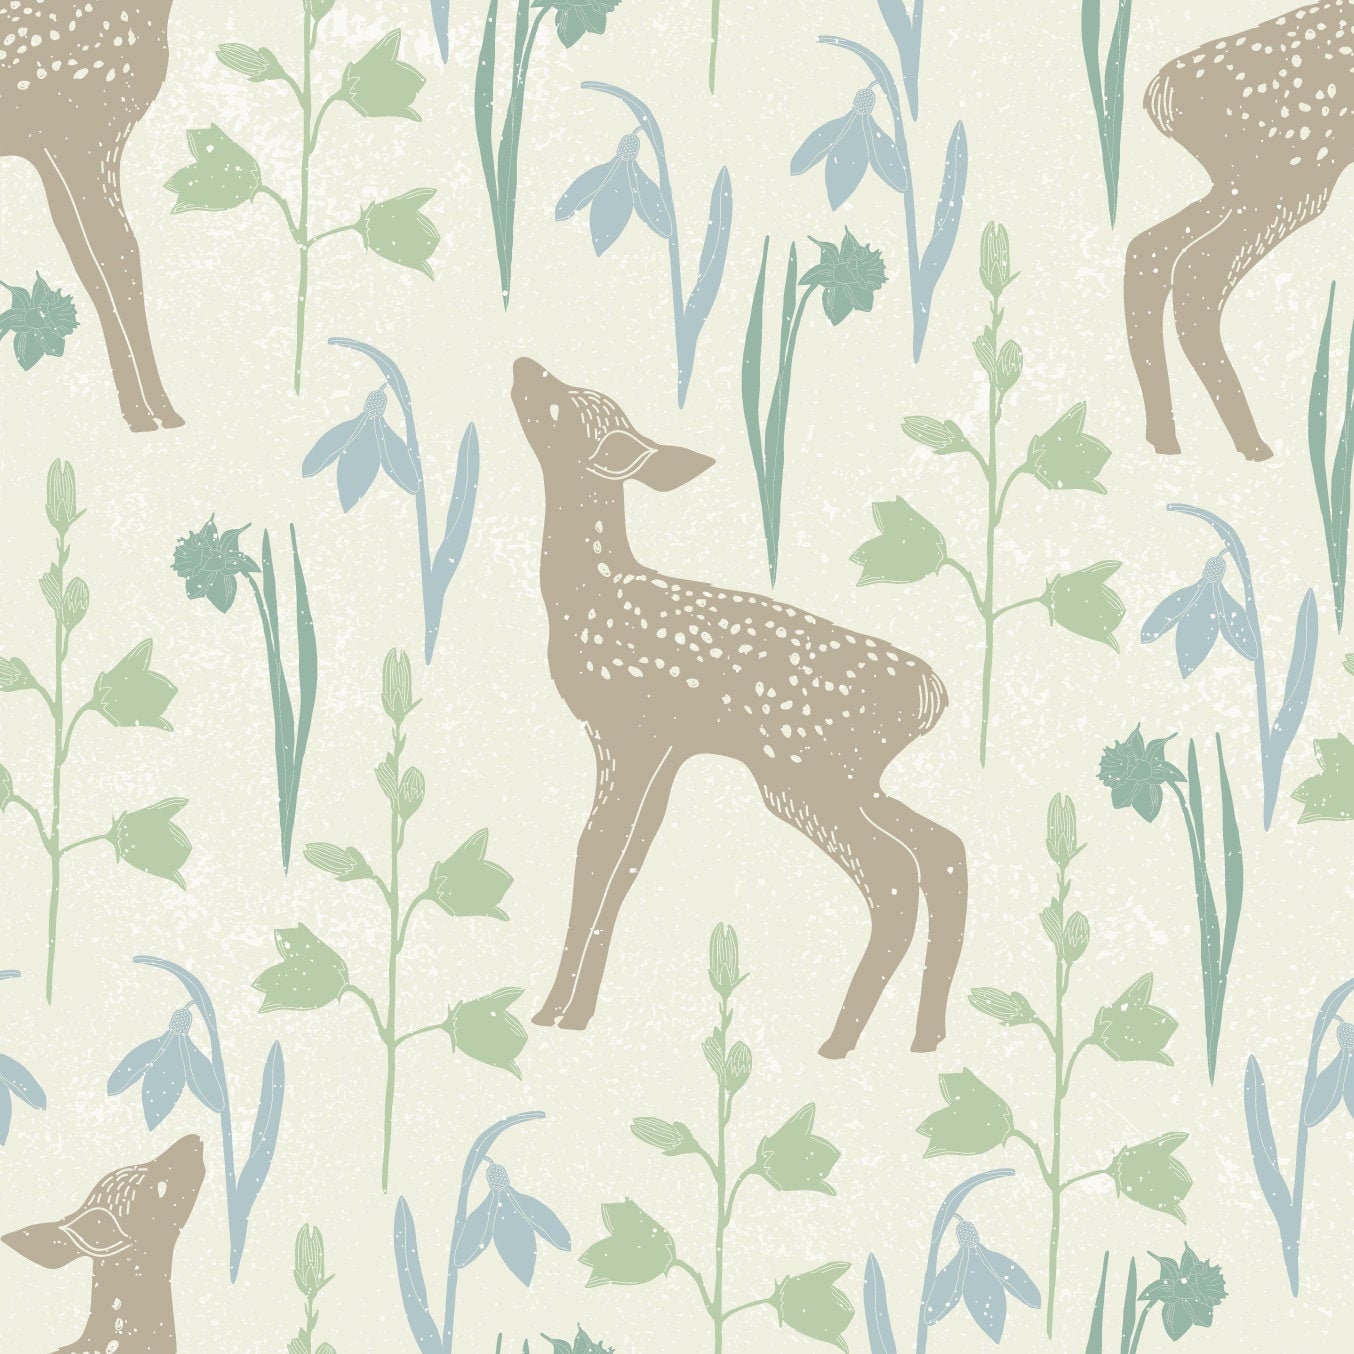 Deer/Fawn Floral Pattern Vinyl Sticker Wrap